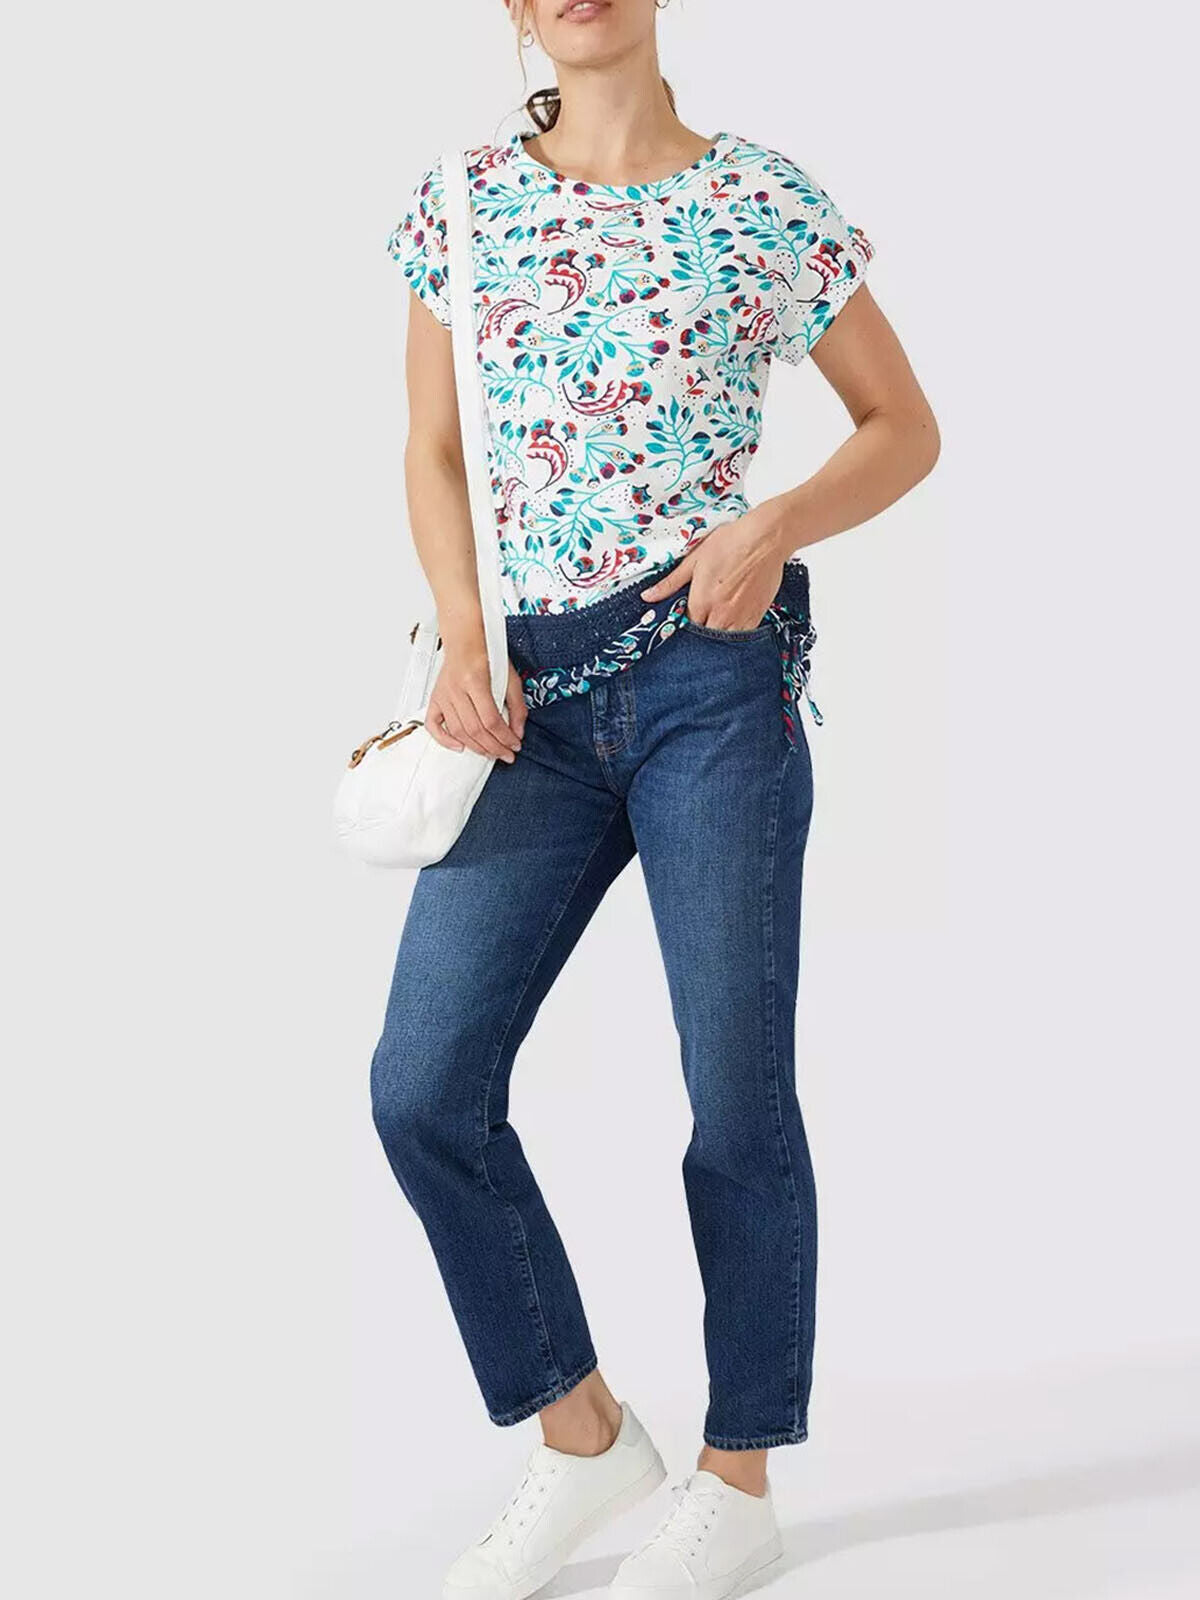 Mantaray Poppy Seed Floral Lace Hem T-Shirt Sizes 8 10 12 14 16 18 20 RRP £25